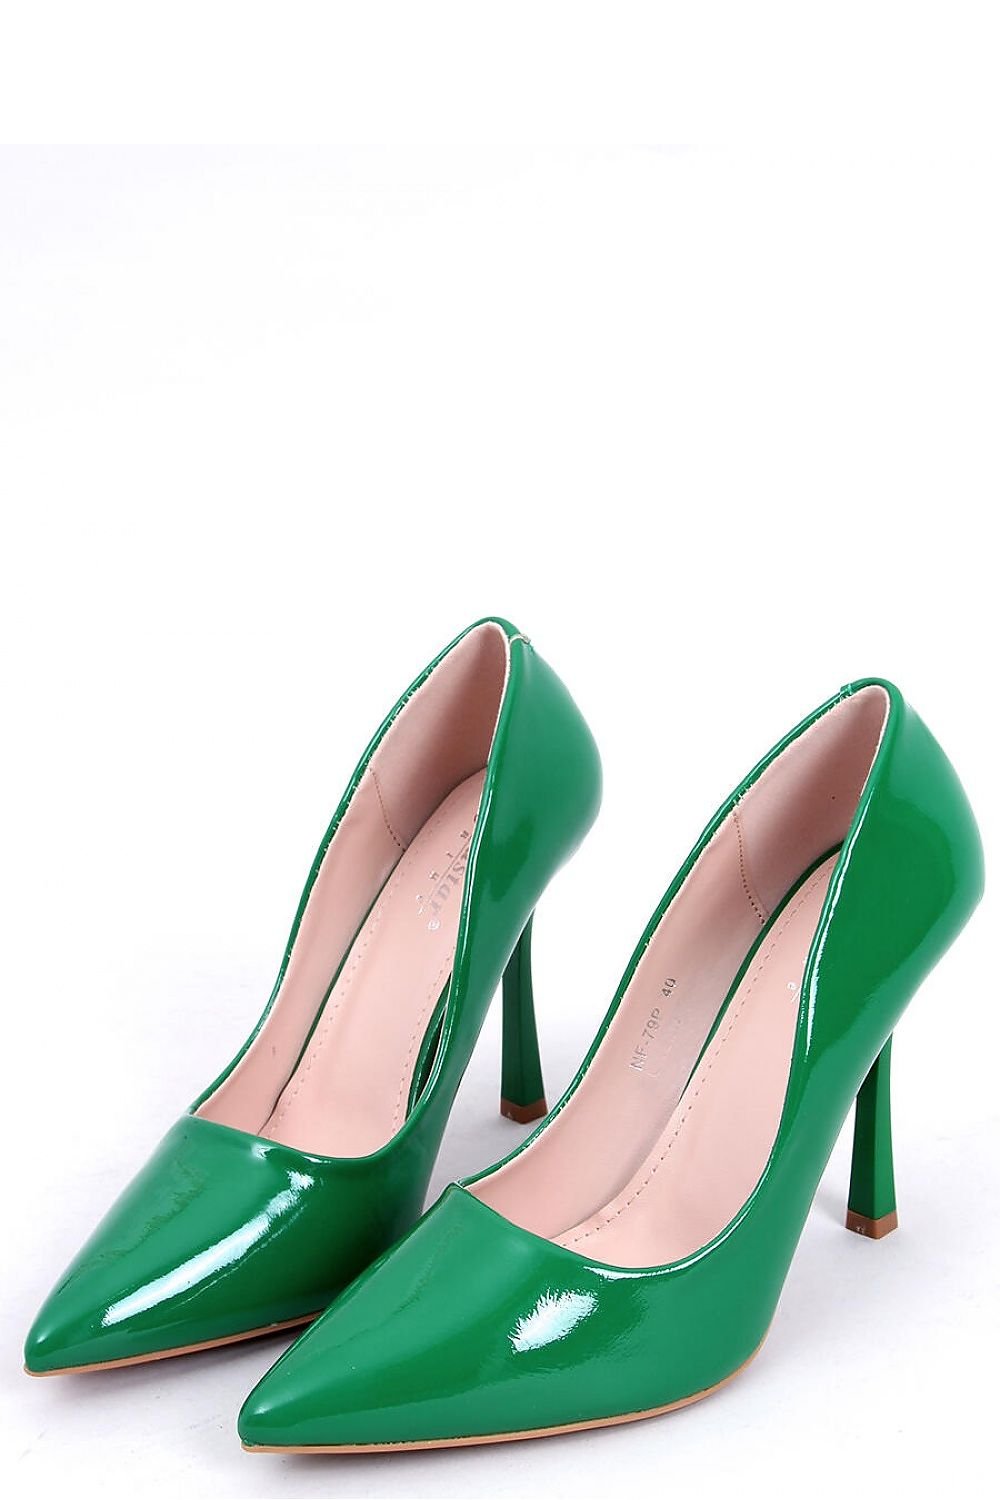 High heels model 172821 Inello High heels Wholesale Clothing Matterhorn